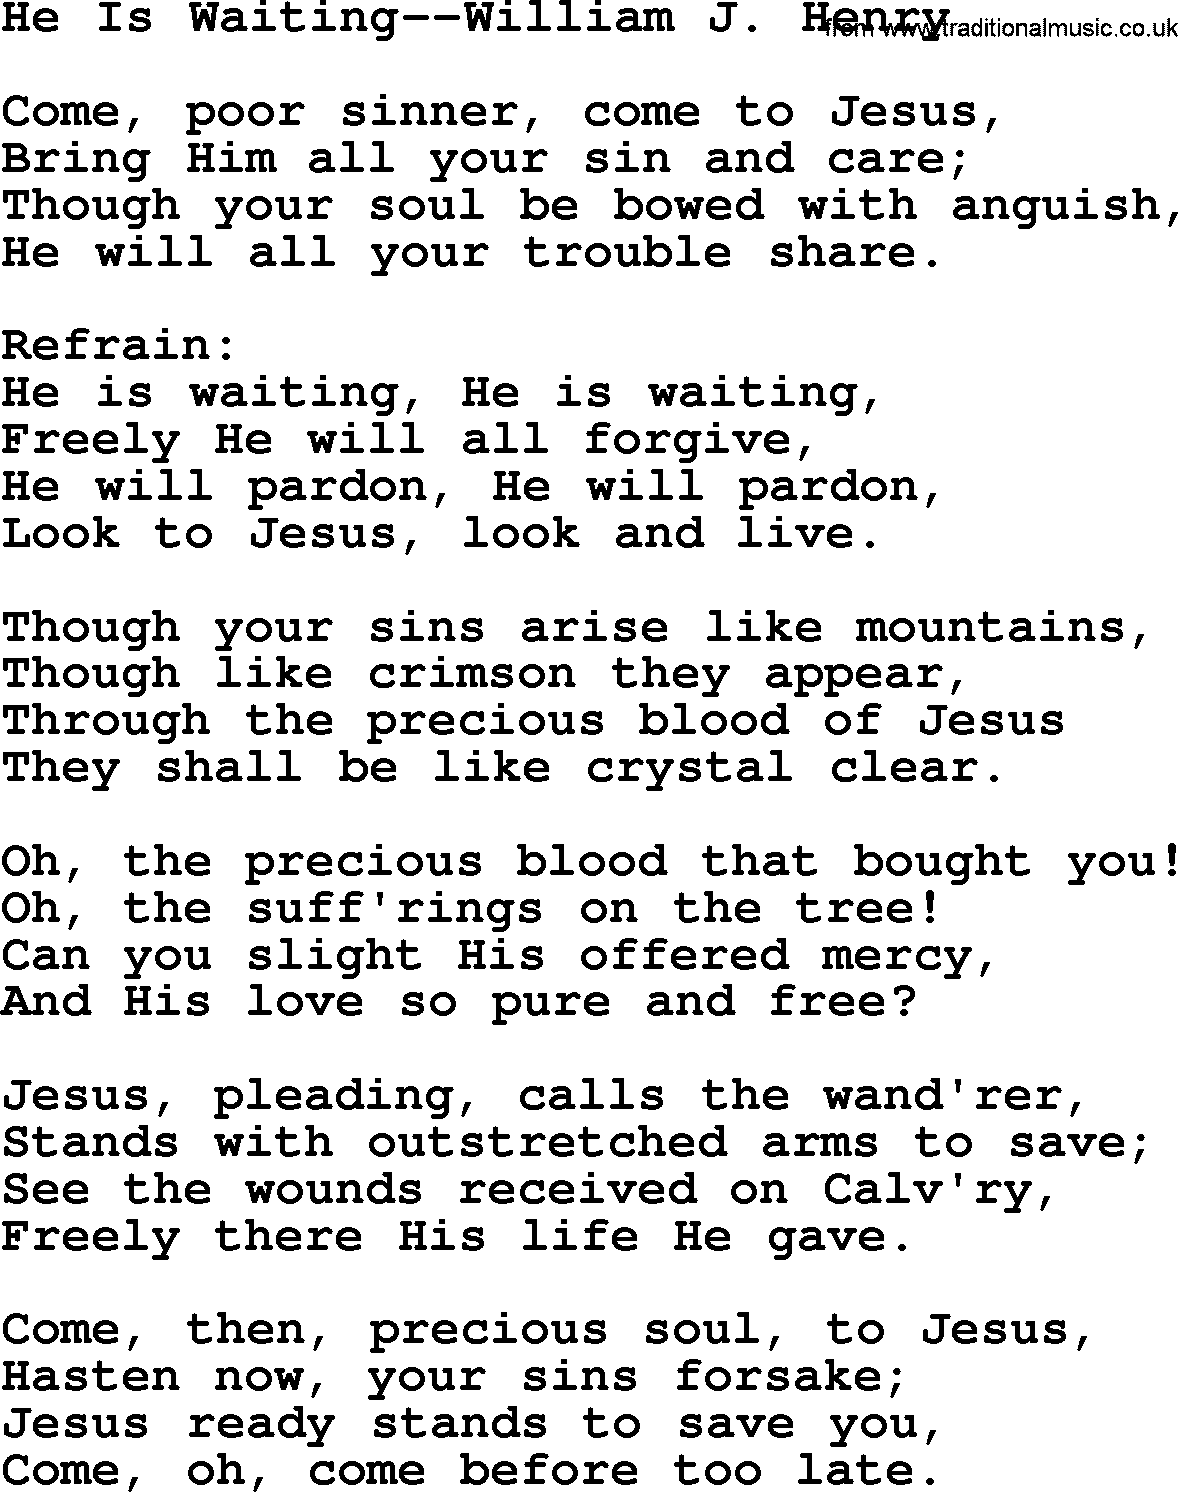 Forgiveness hymns, Hymn: He Is Waiting-William J. Henry, lyrics with PDF